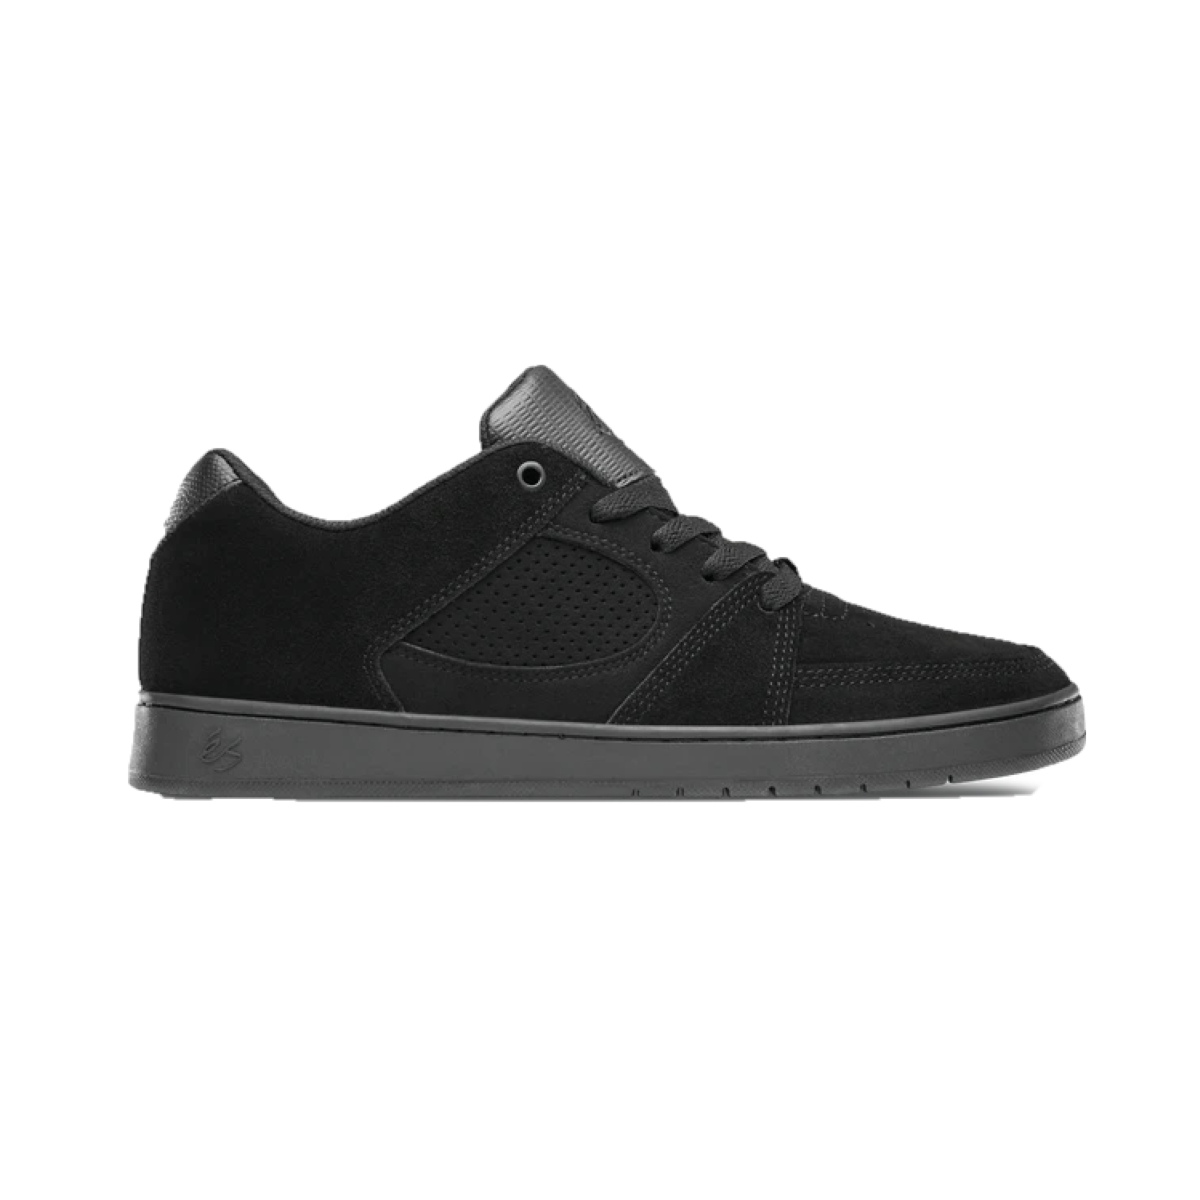 ÉS 5101000144/004 ACCEL SLIM MN'S (Medium) Black Suede Skate Shoes